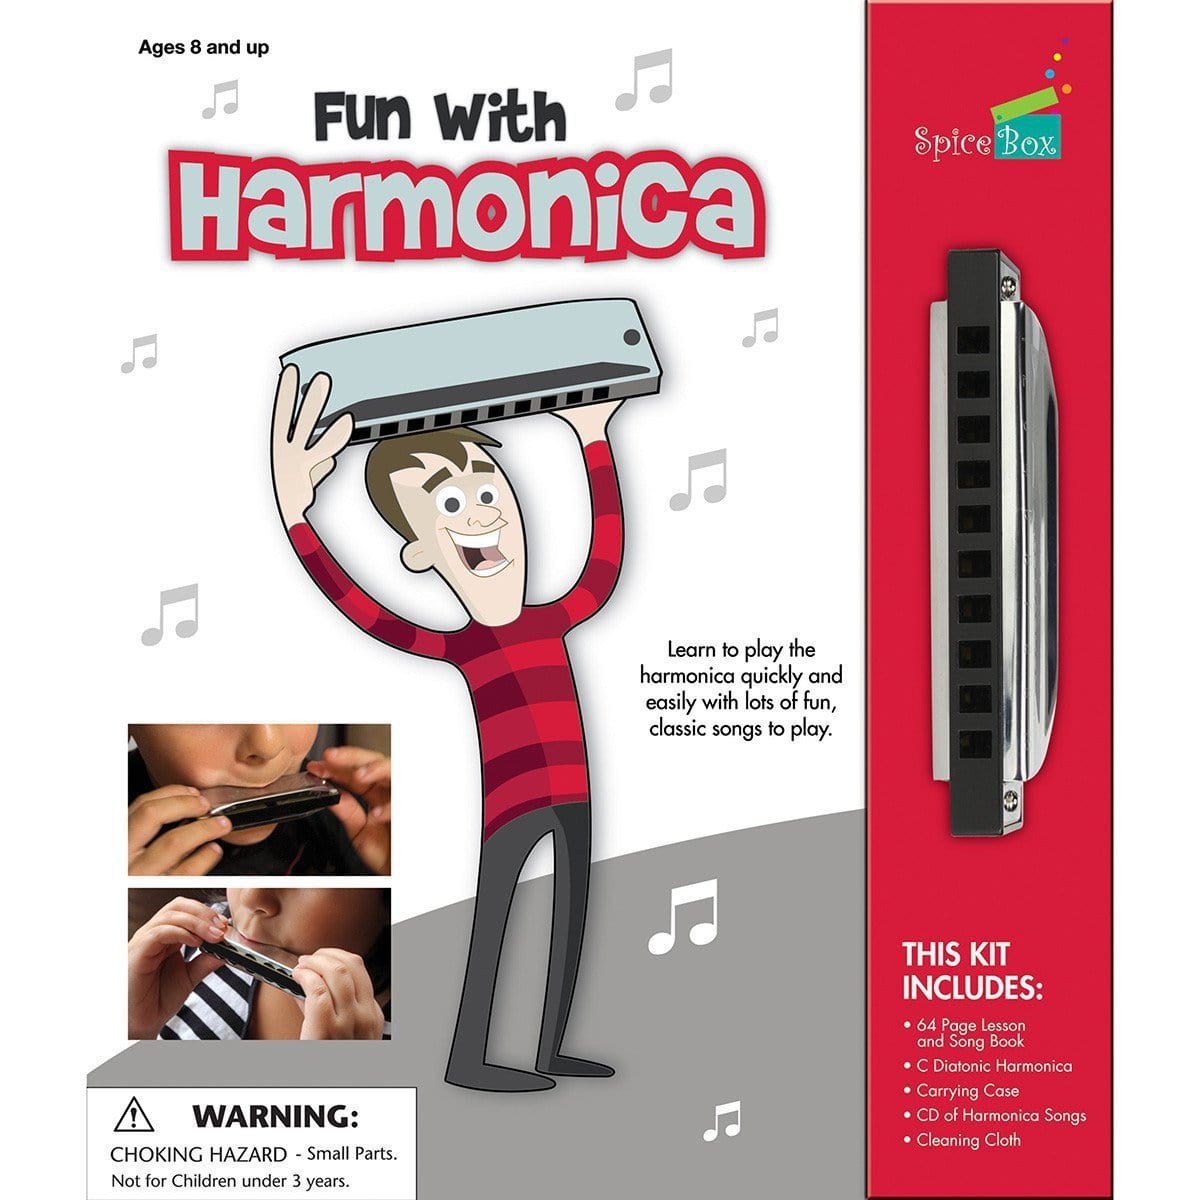 Spice Box Fun With Harmonica